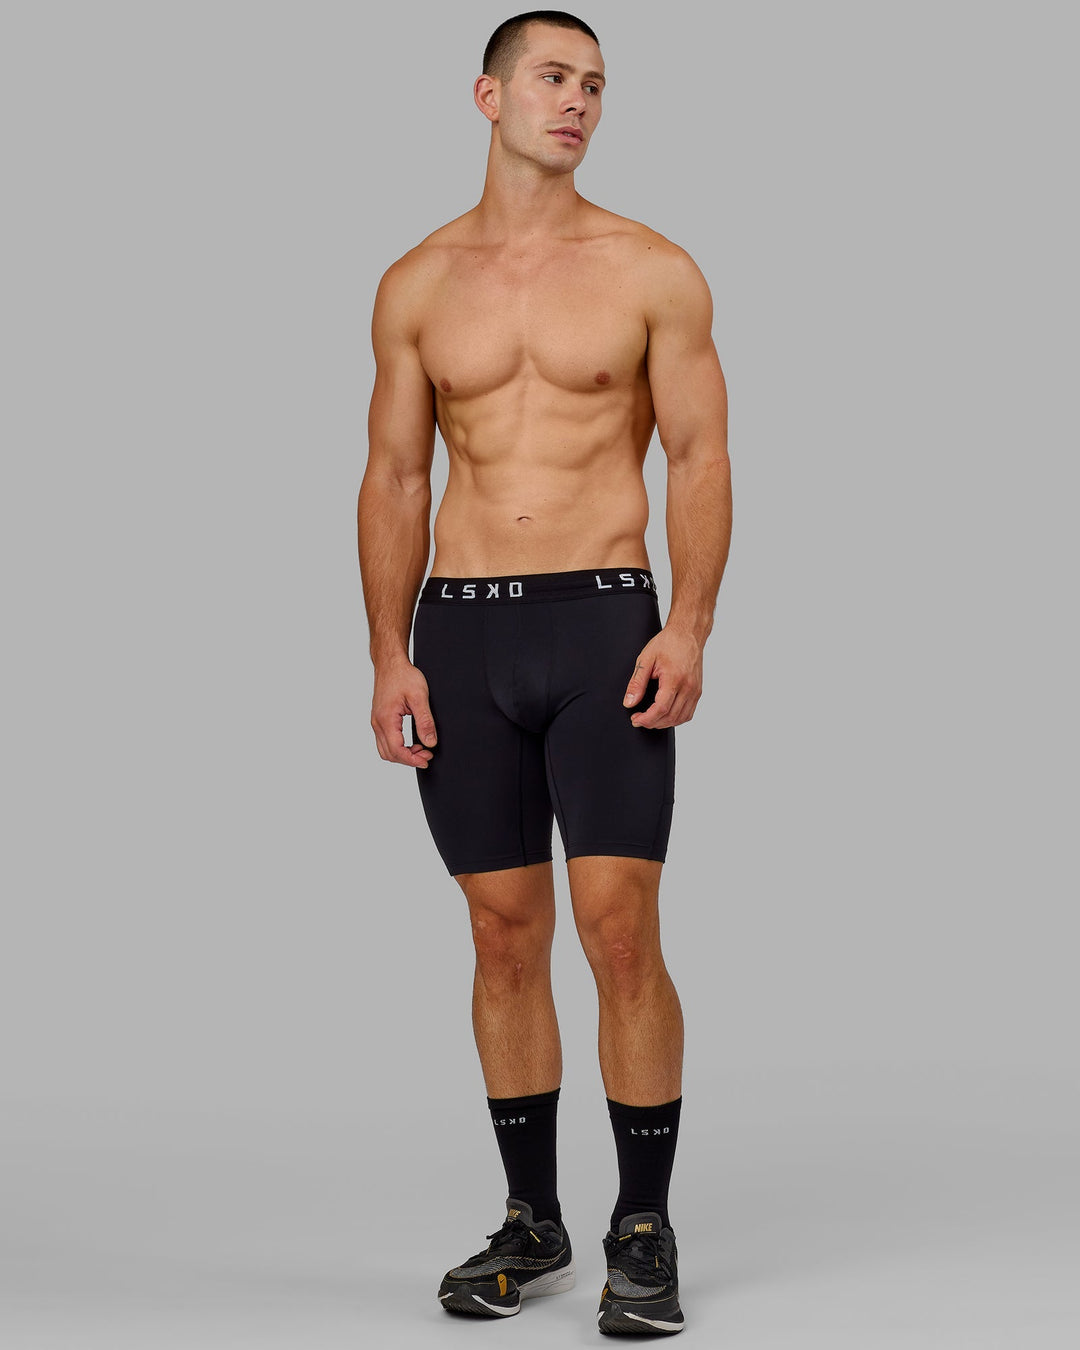 Men's Compression Tights Half Shorts Sports Tight Black Fitness